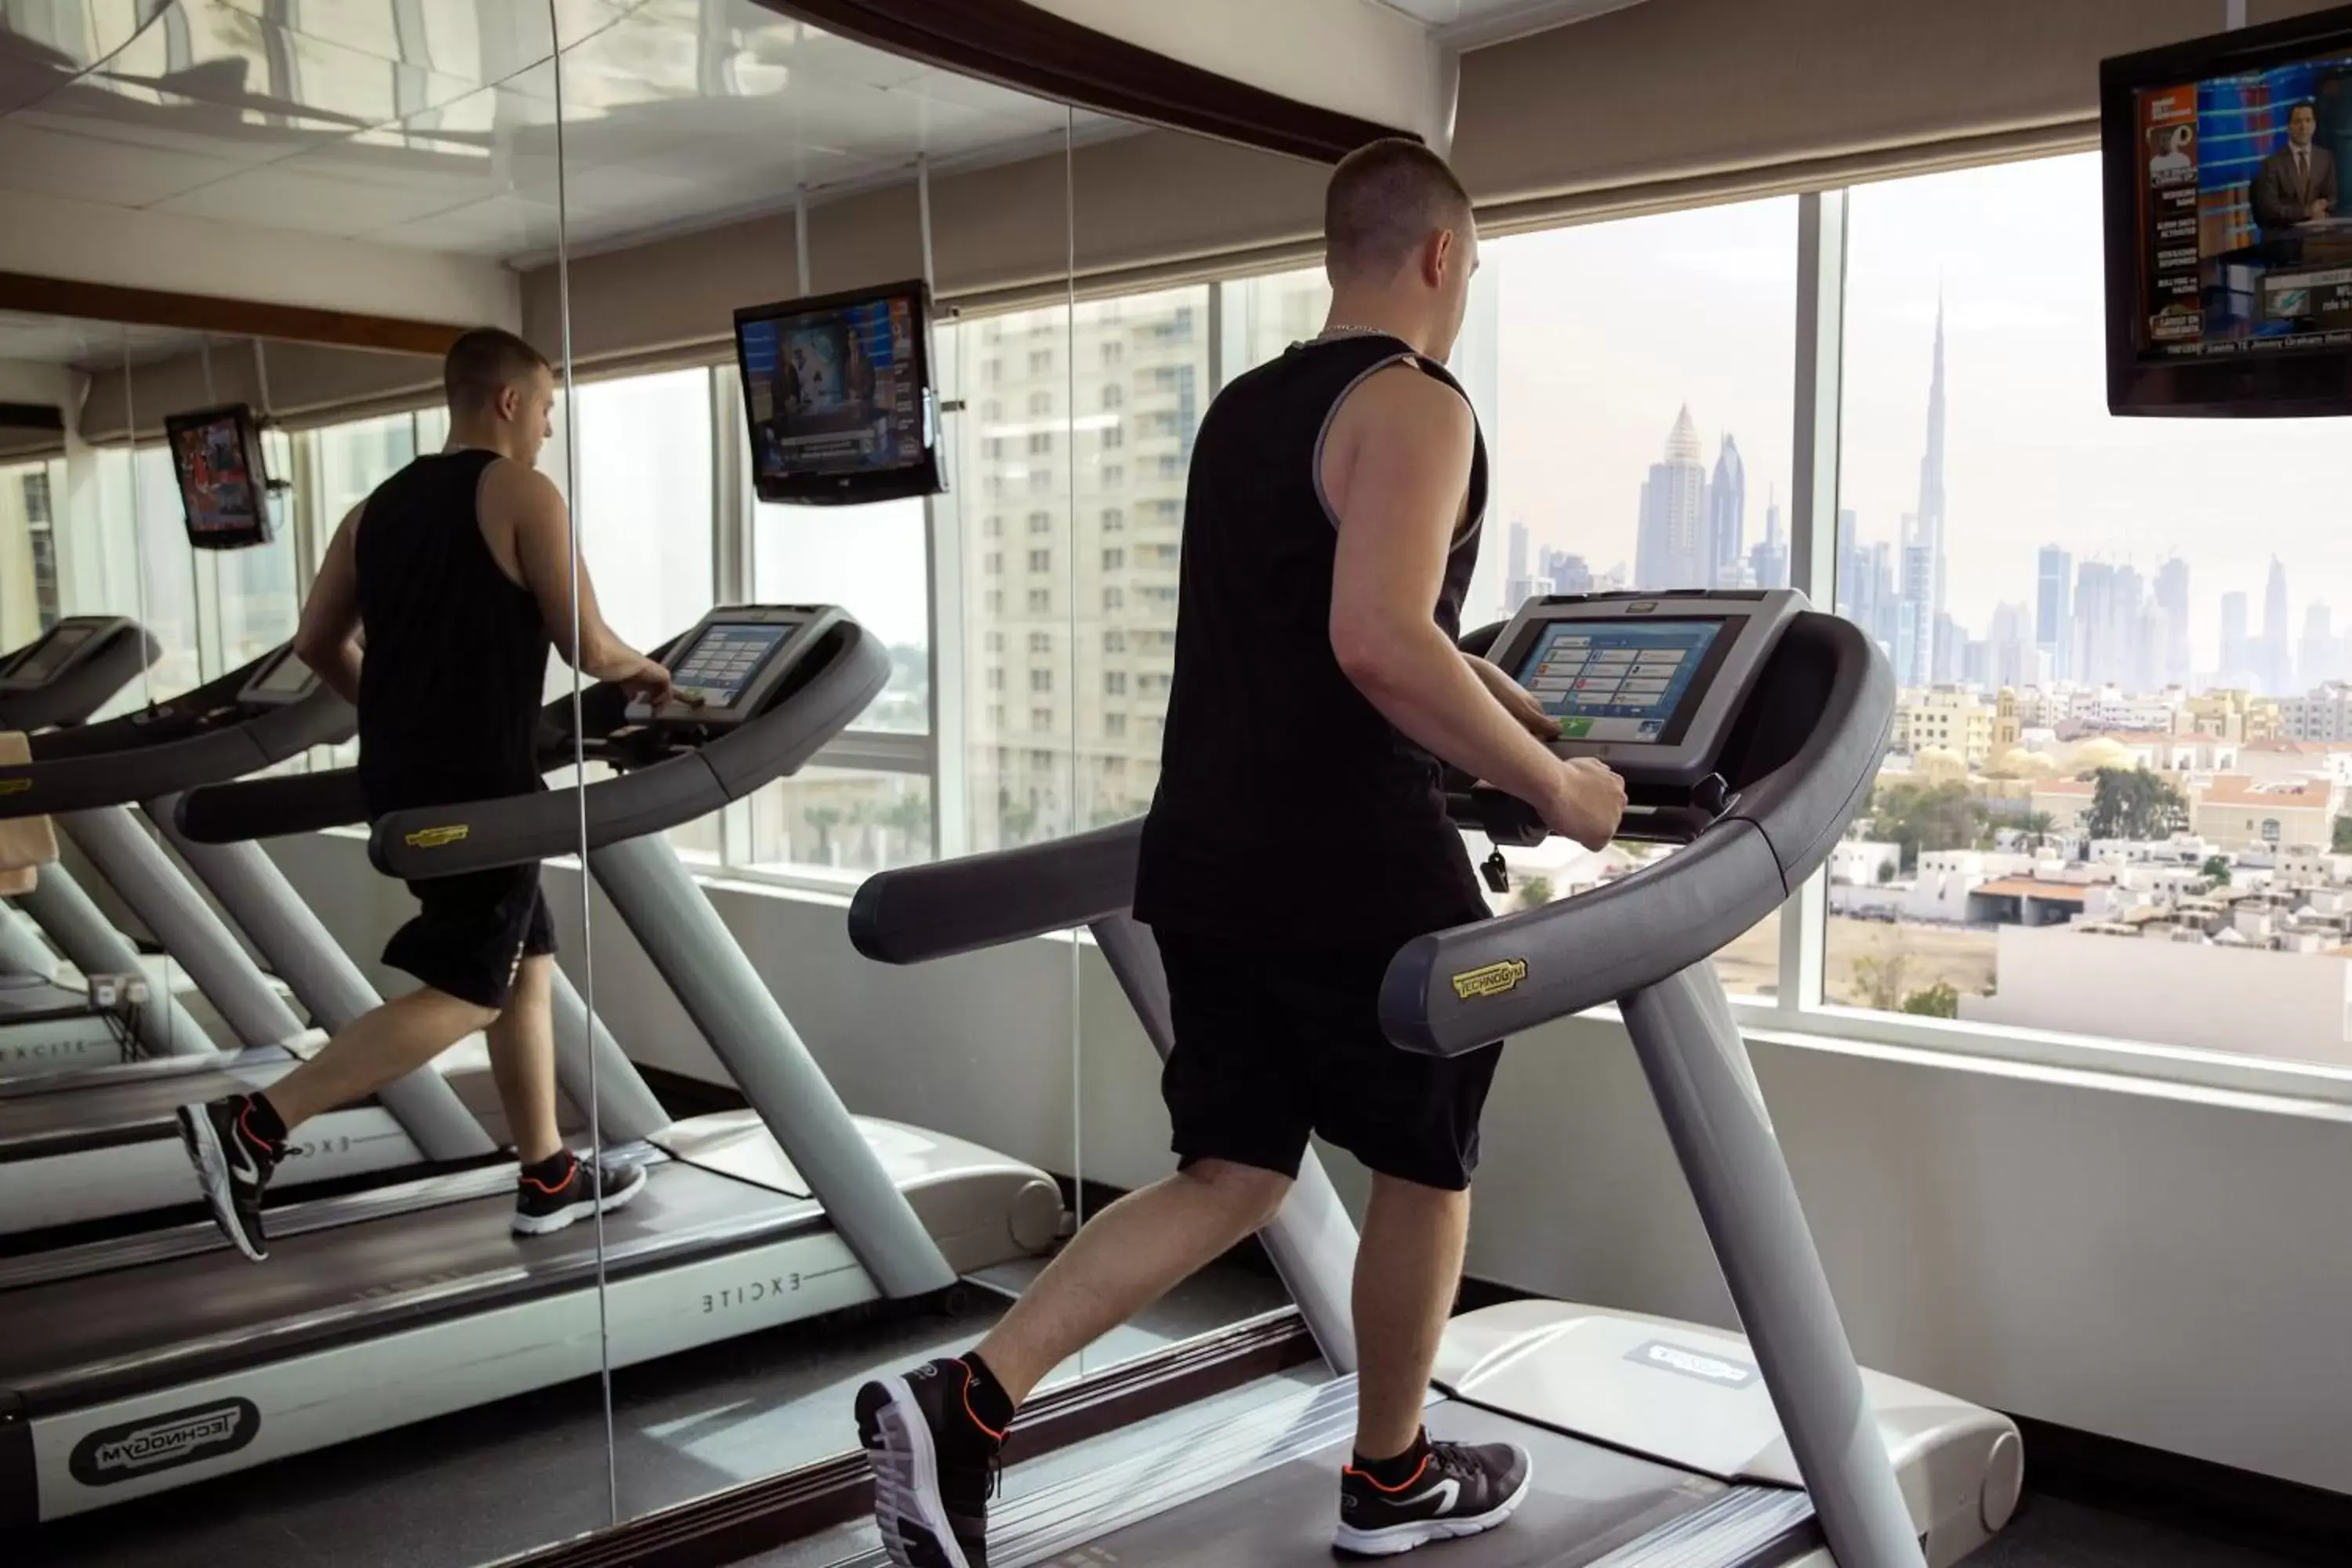 Fitness centre/facilities in Jumeira Rotana – Dubai